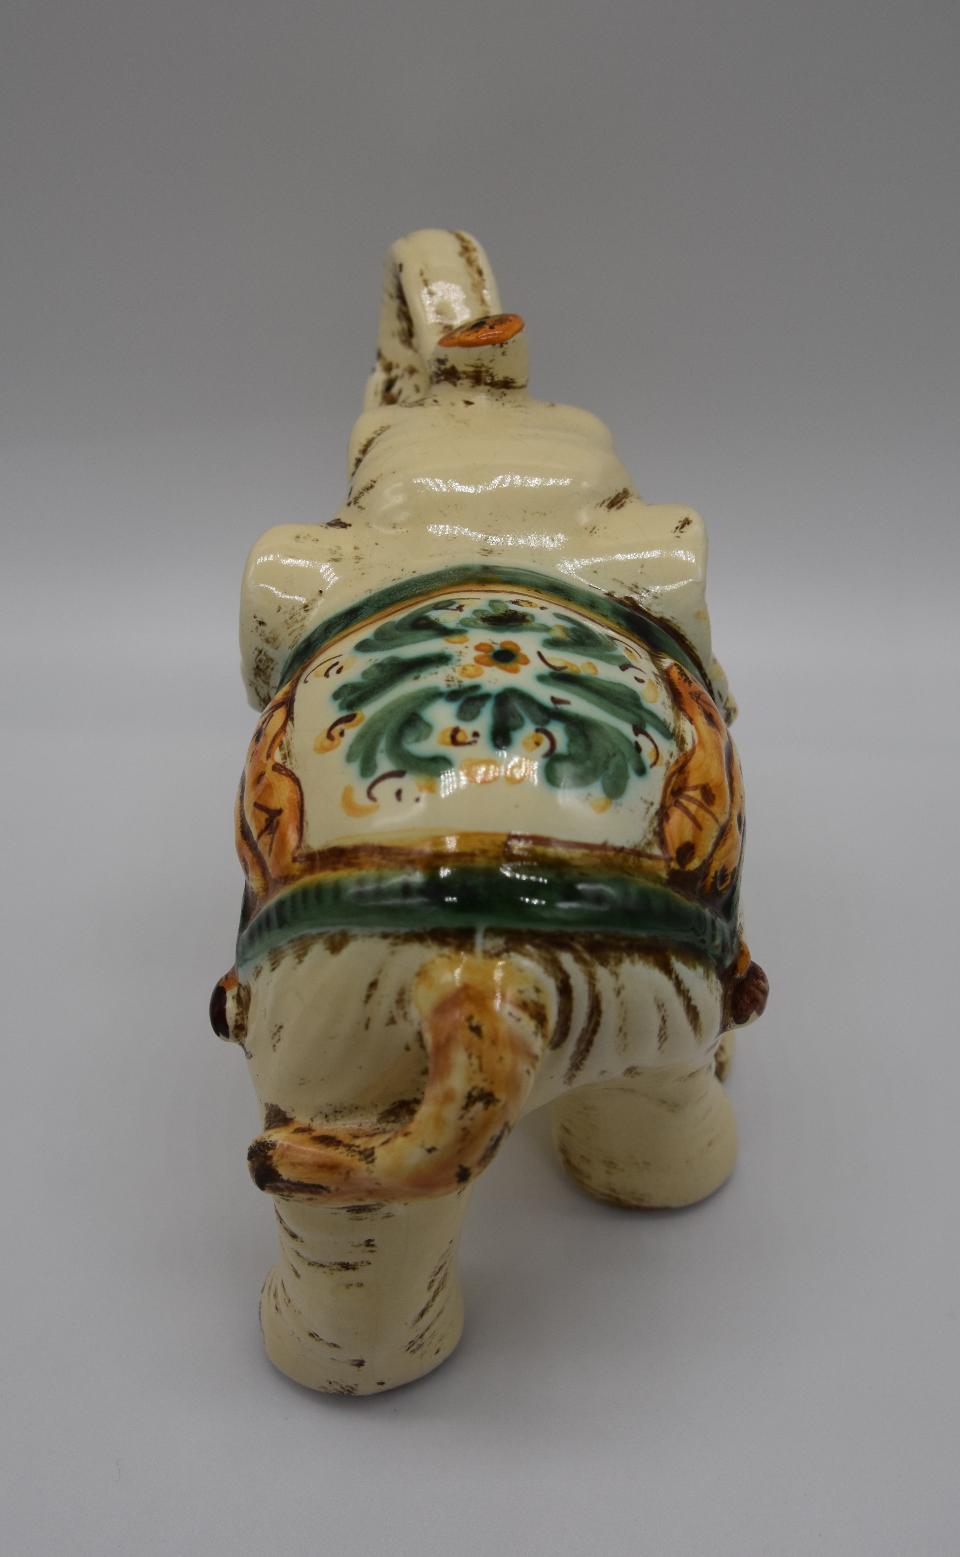 Elefante in ceramica Produzione artigianale di Caltagirone h.10 cm